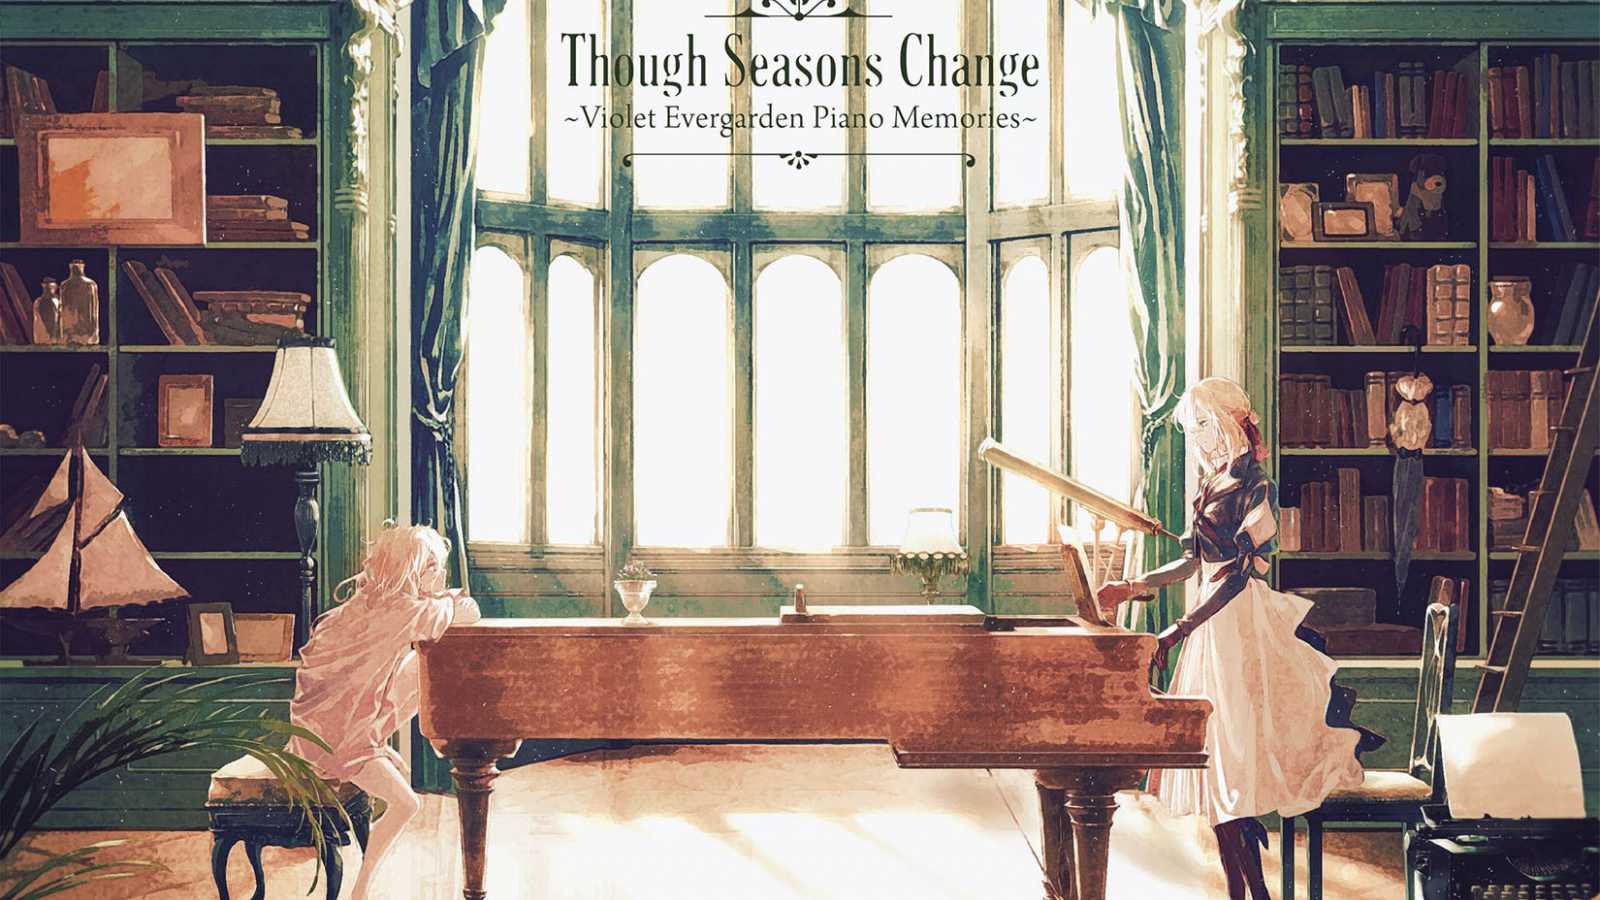 Wydanie "Violet Evergarden Piano Arrangement Album" © BANDAI NAMCO Arts Inc. / Lantis all rights reserved